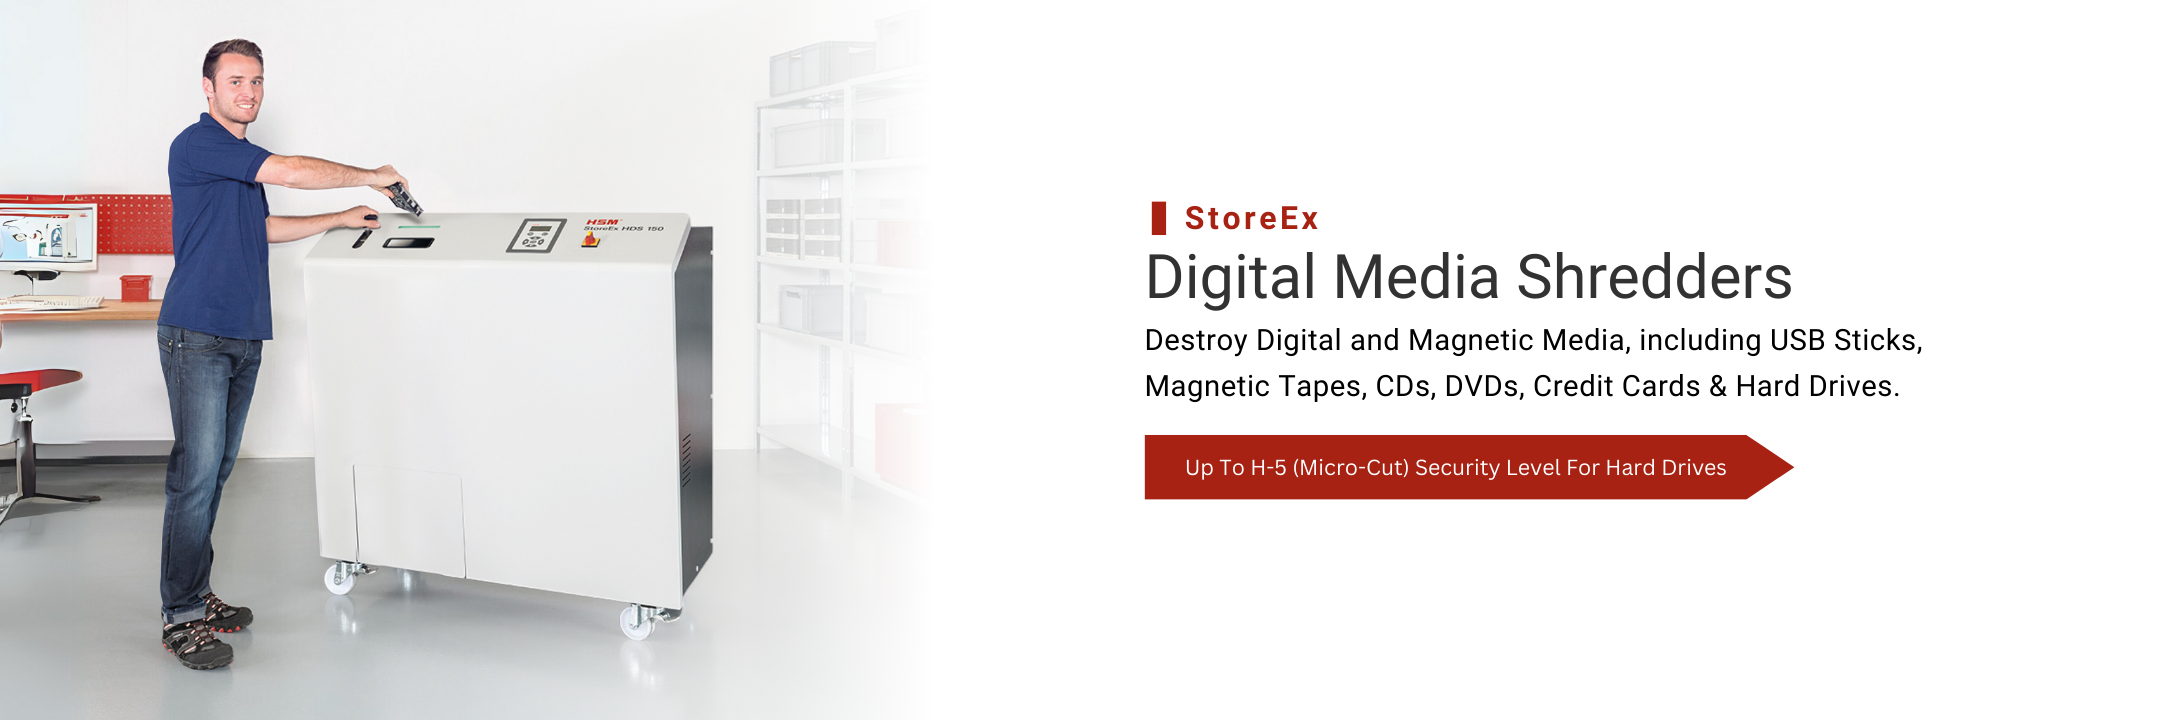 HSM-Digital-Media-Shredders-USA-2